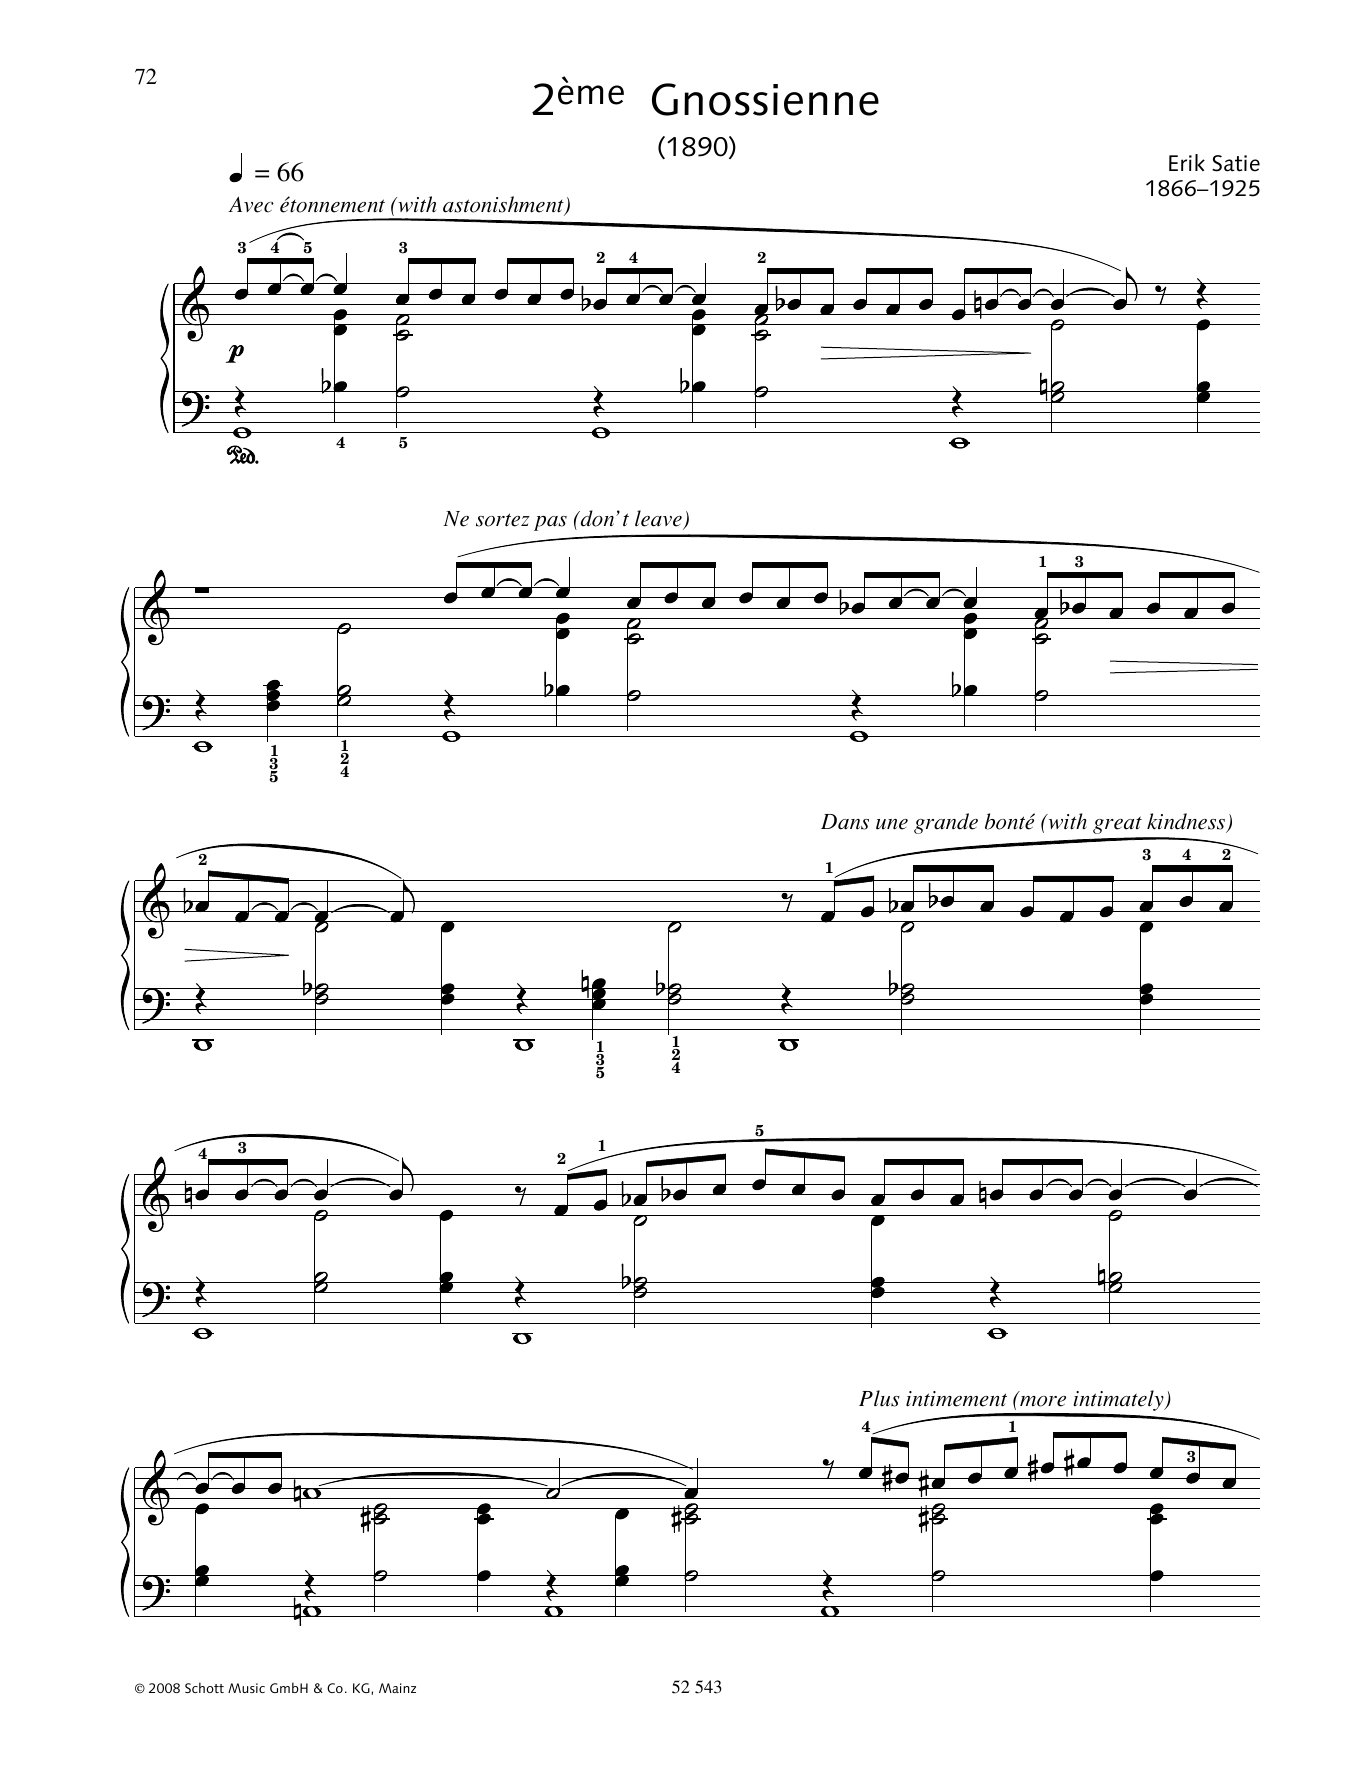 2ème Gnossienne sheet music